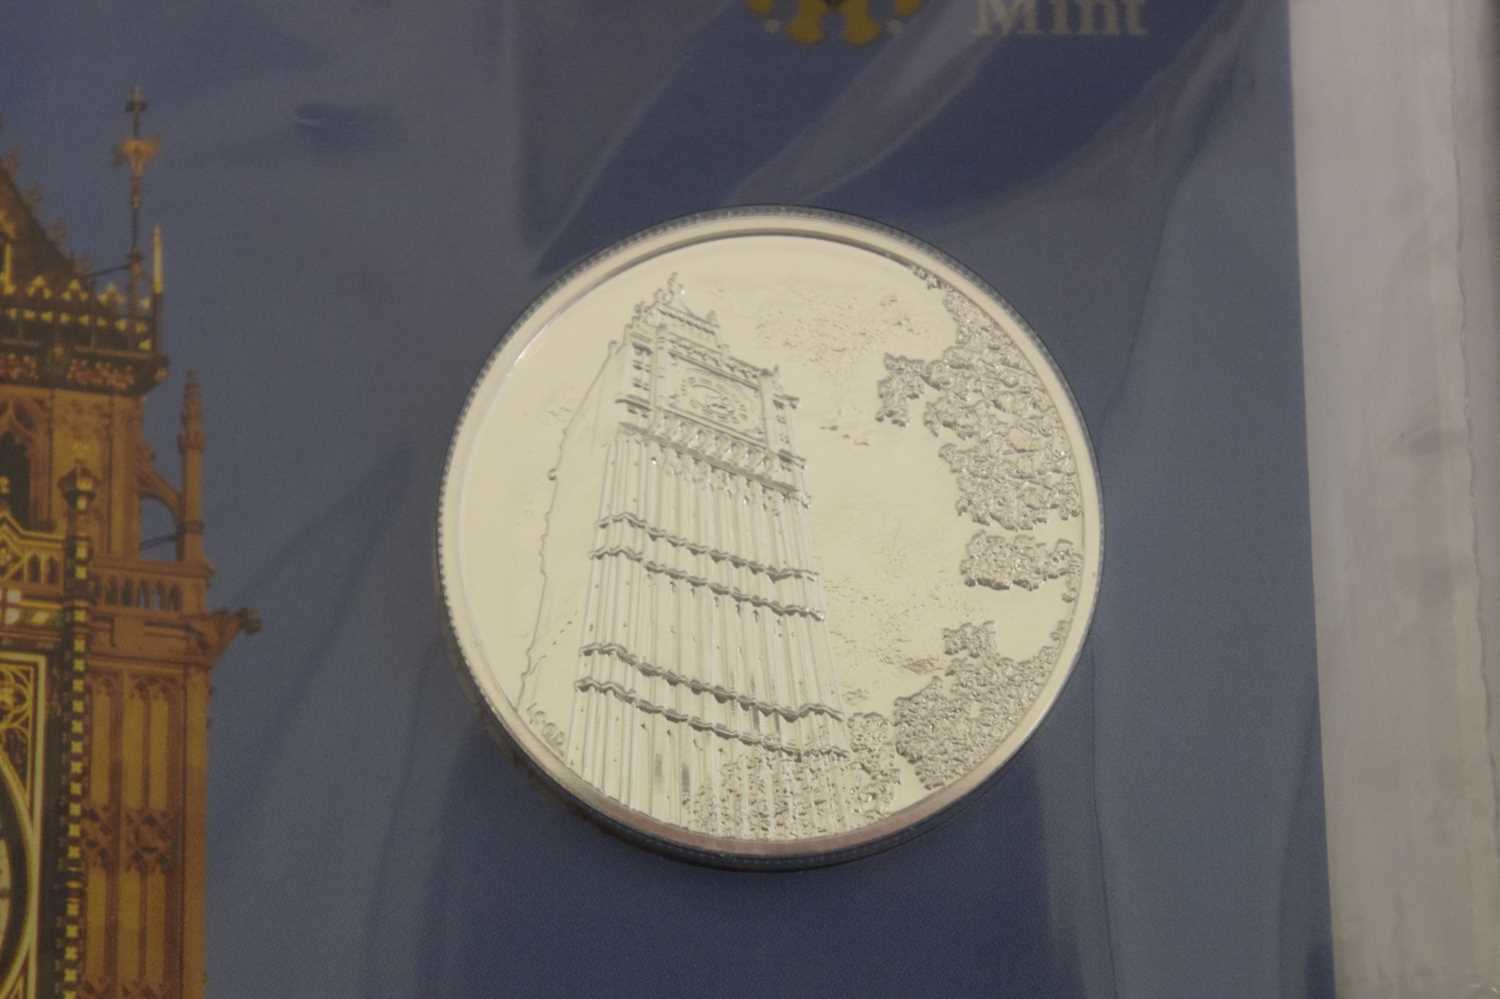 Two Royal Mint Elizabeth II UK fine silver £100 Coins, 2015 - Image 4 of 5